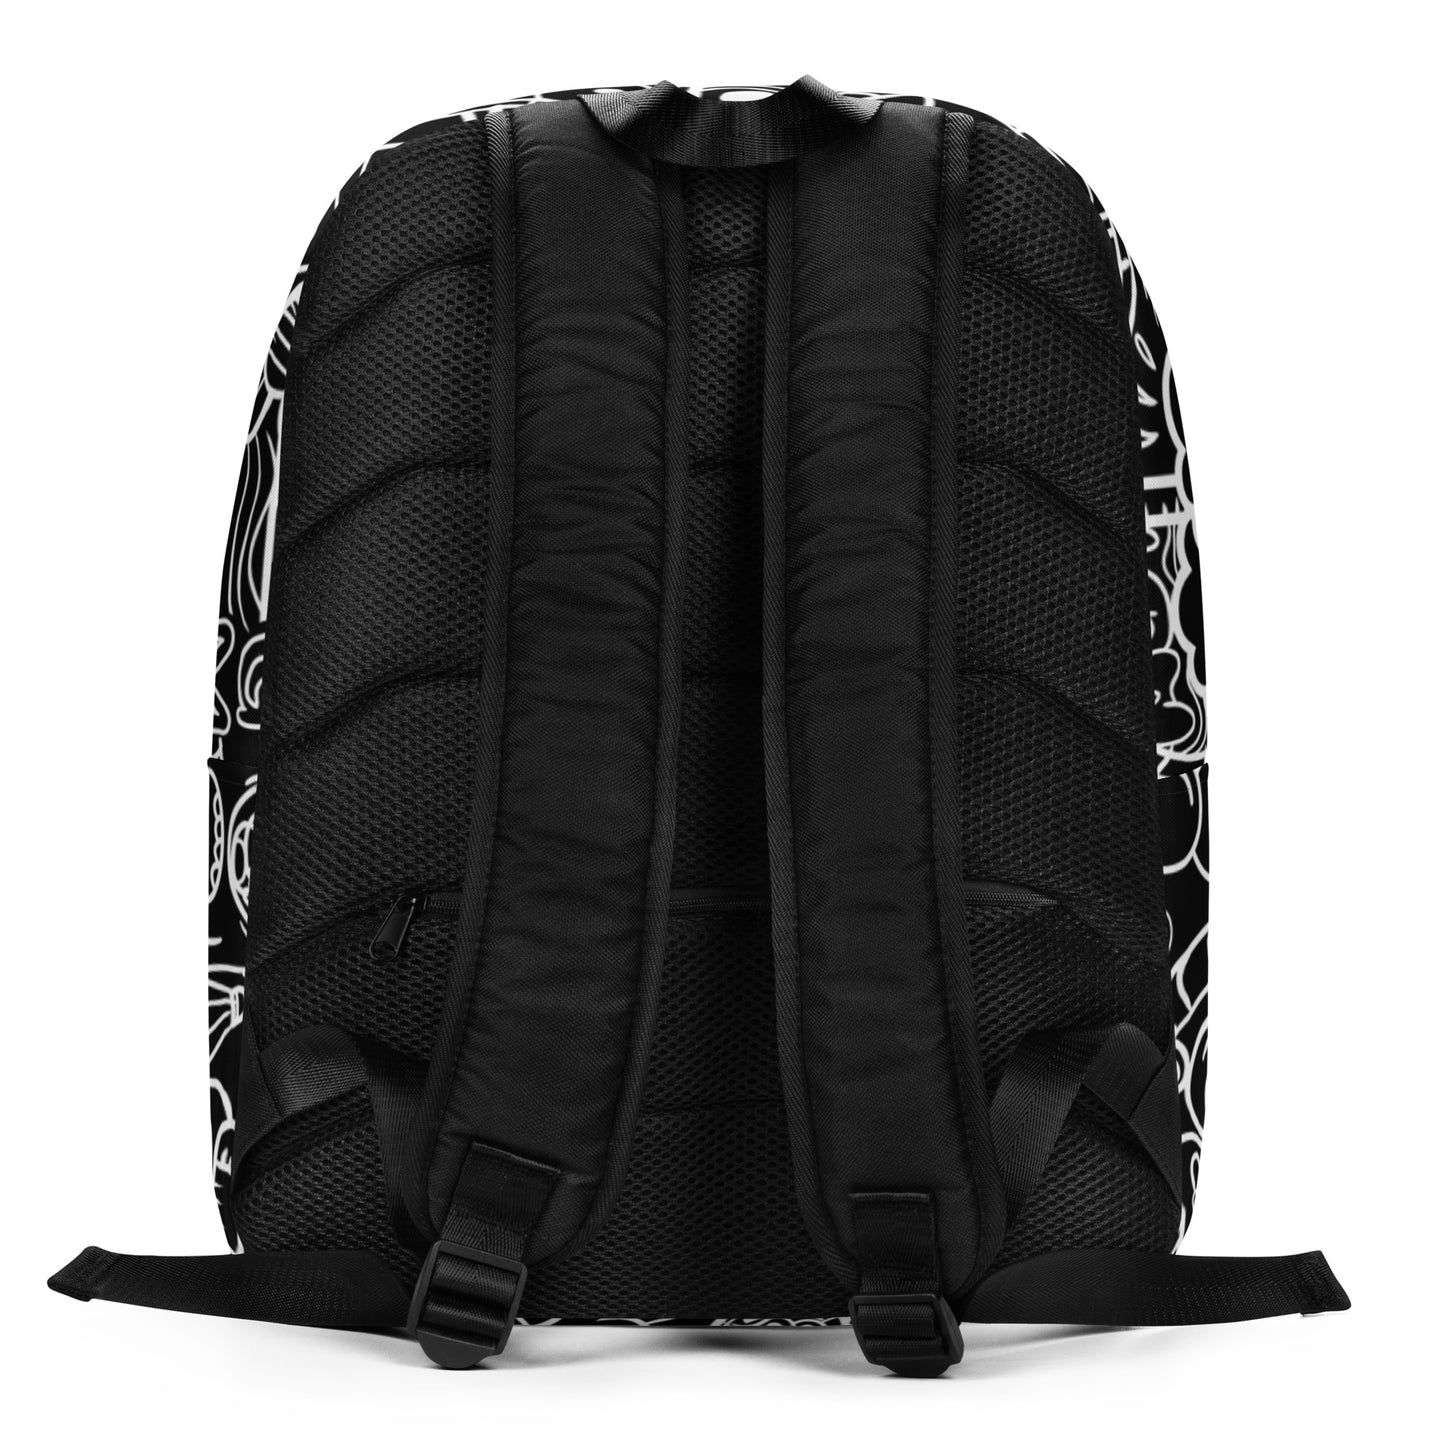 Black Graffiti Backpack